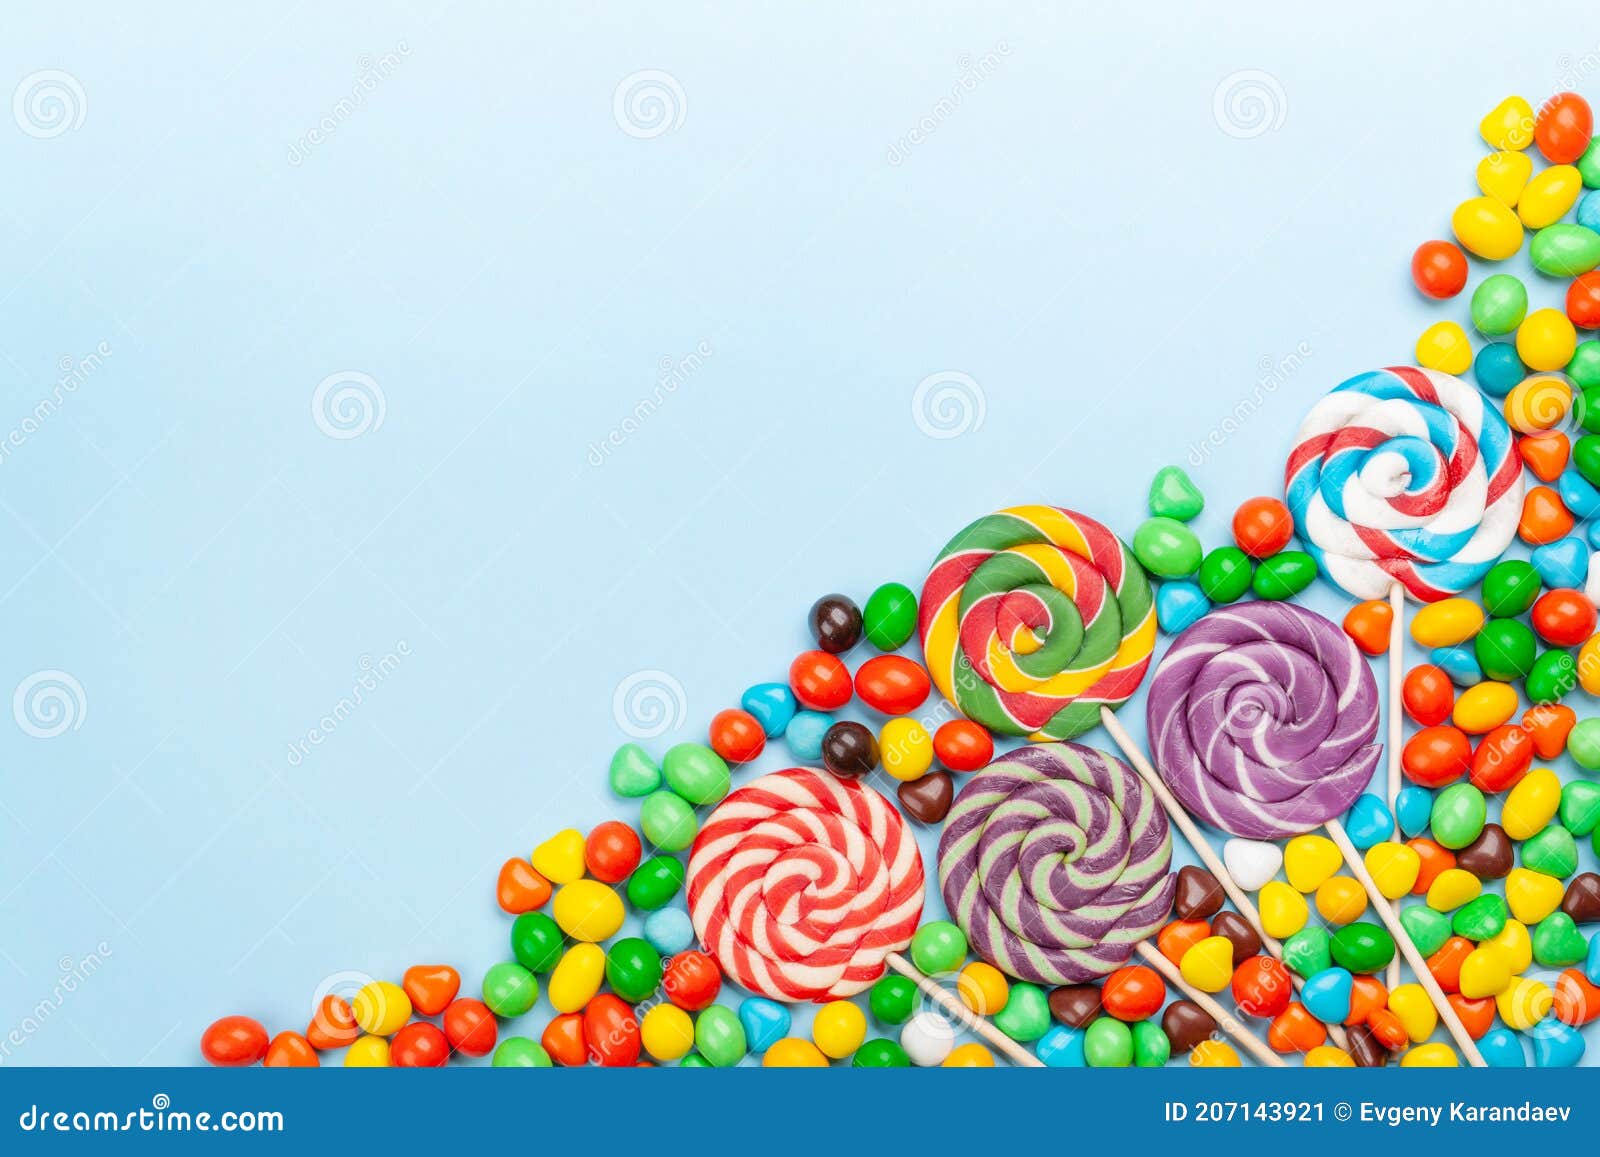 Various Sweets Assortment. Candy, Bonbon, Lollipop Stock Image - Image ...